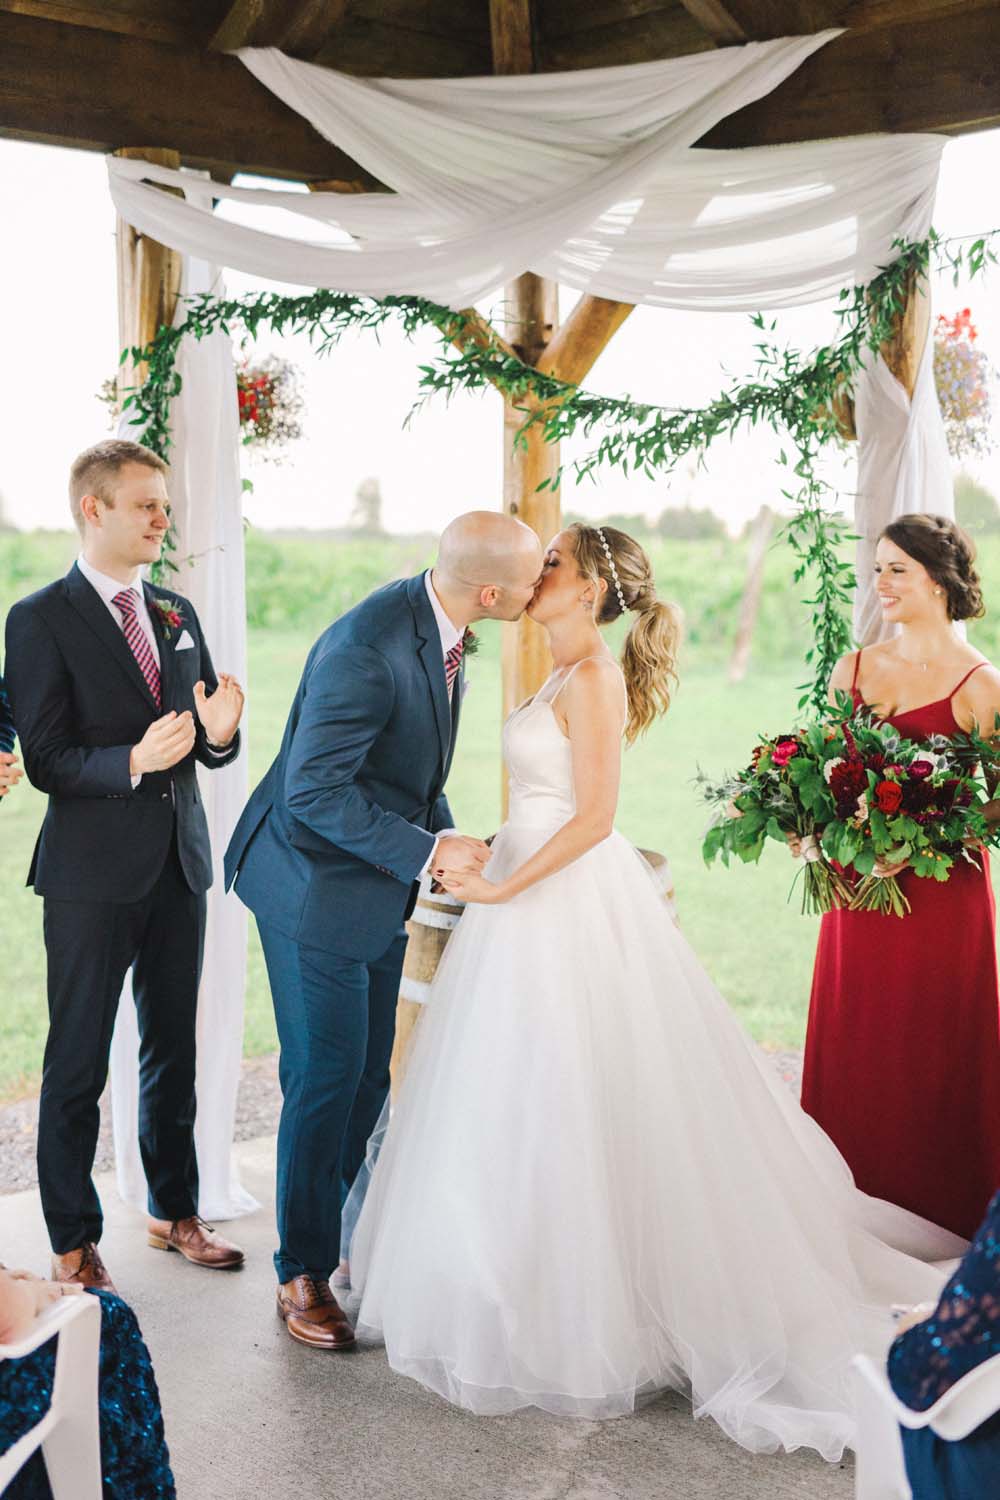 An Enchanting Vineyard Wedding in Ottawa - Bride and groom 